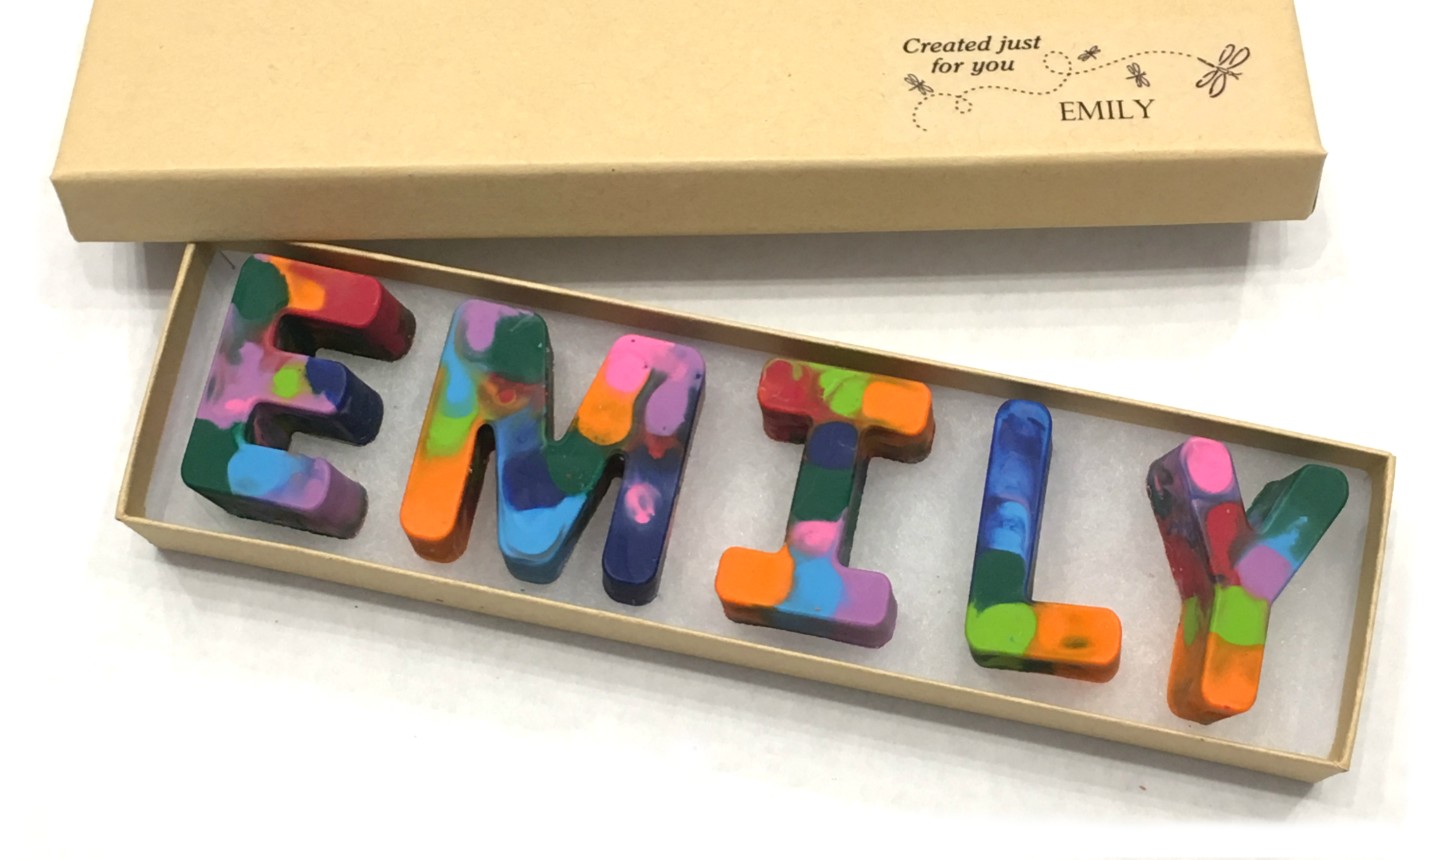 emily crayon name in a box